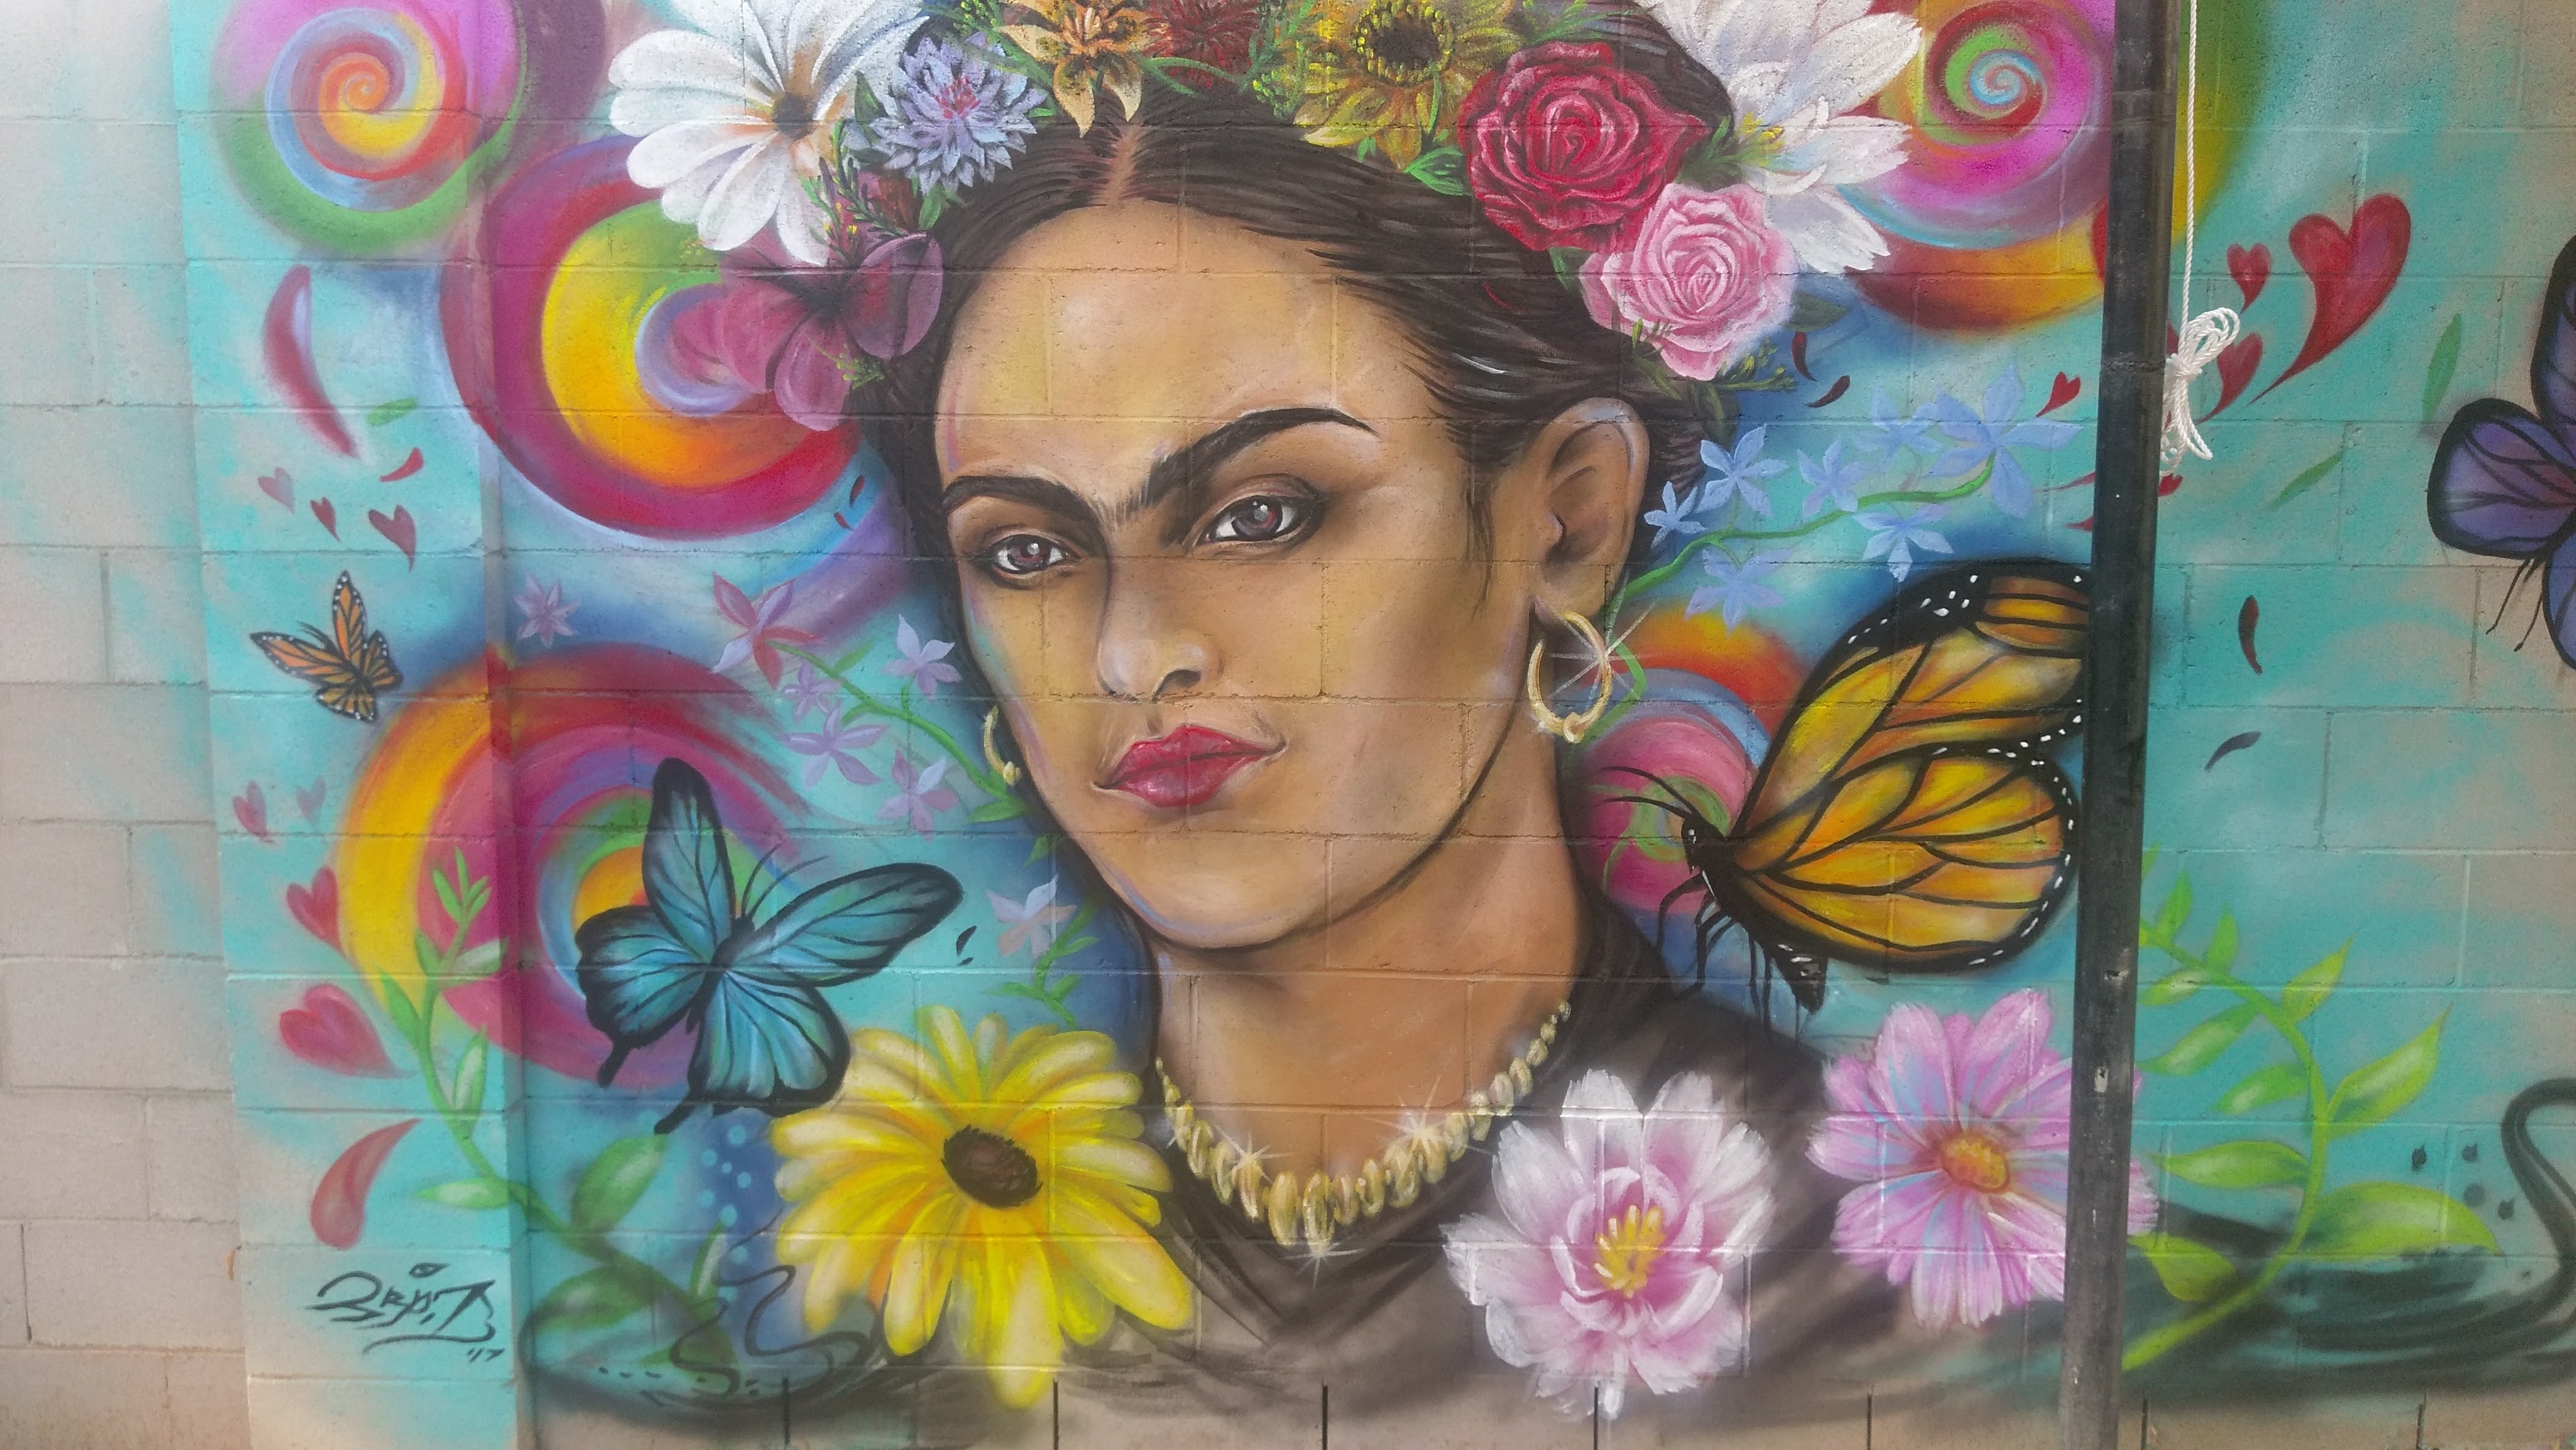 mural portrait of Frida Kahlo